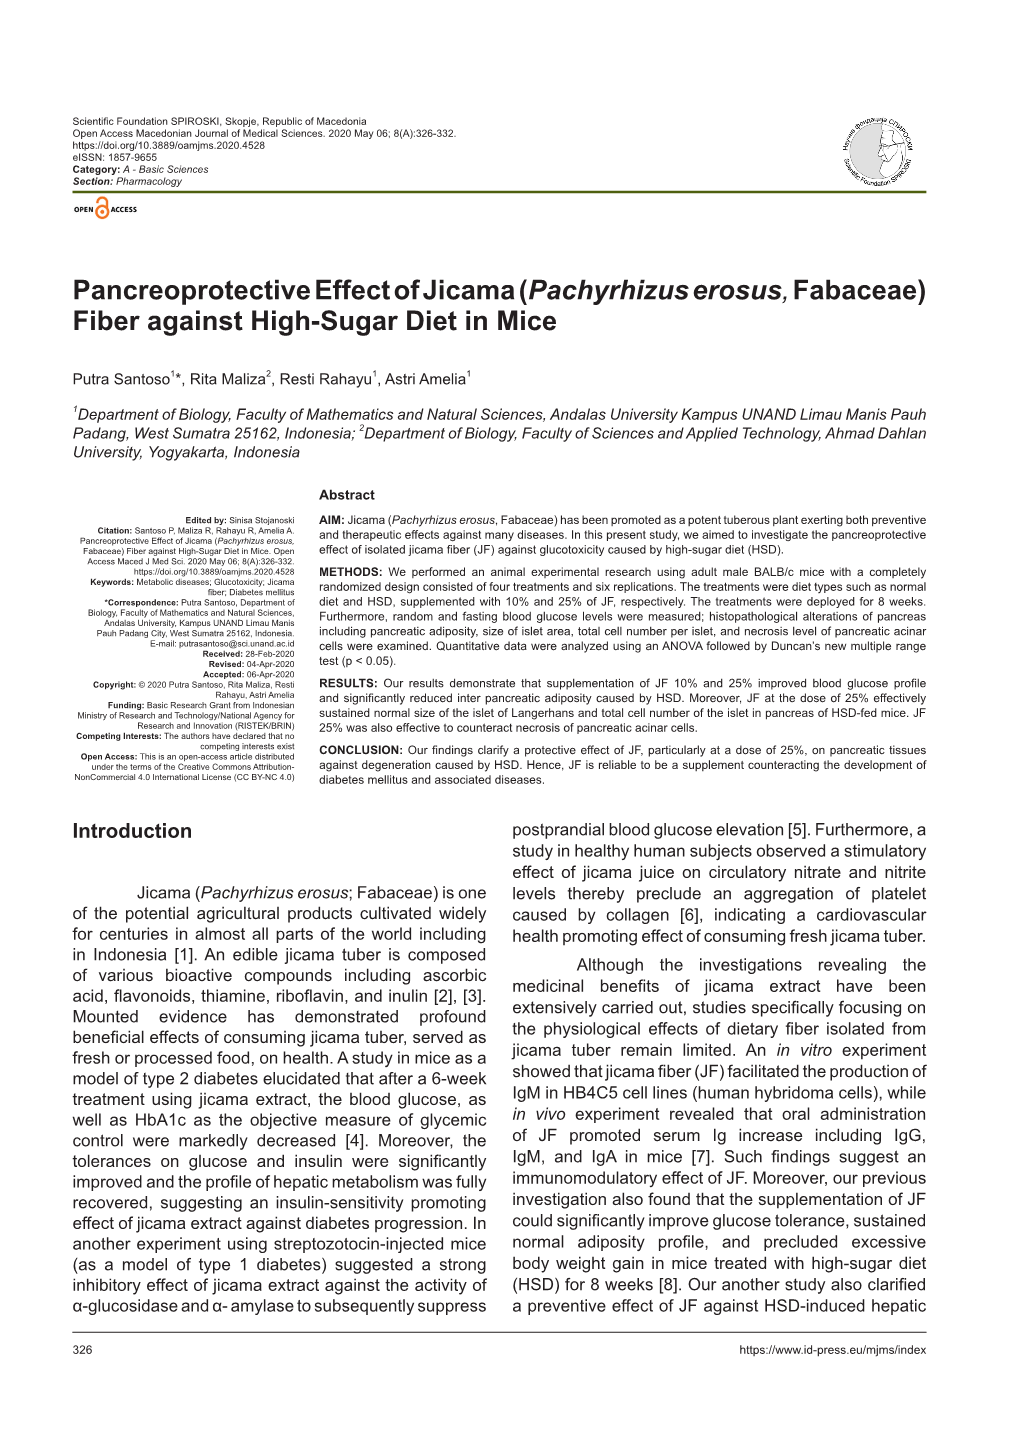 Pancreoprotective Effect of Jicama (Pachyrhizus Erosus, Fabaceae) Fiber Against High-Sugar Diet in Mice